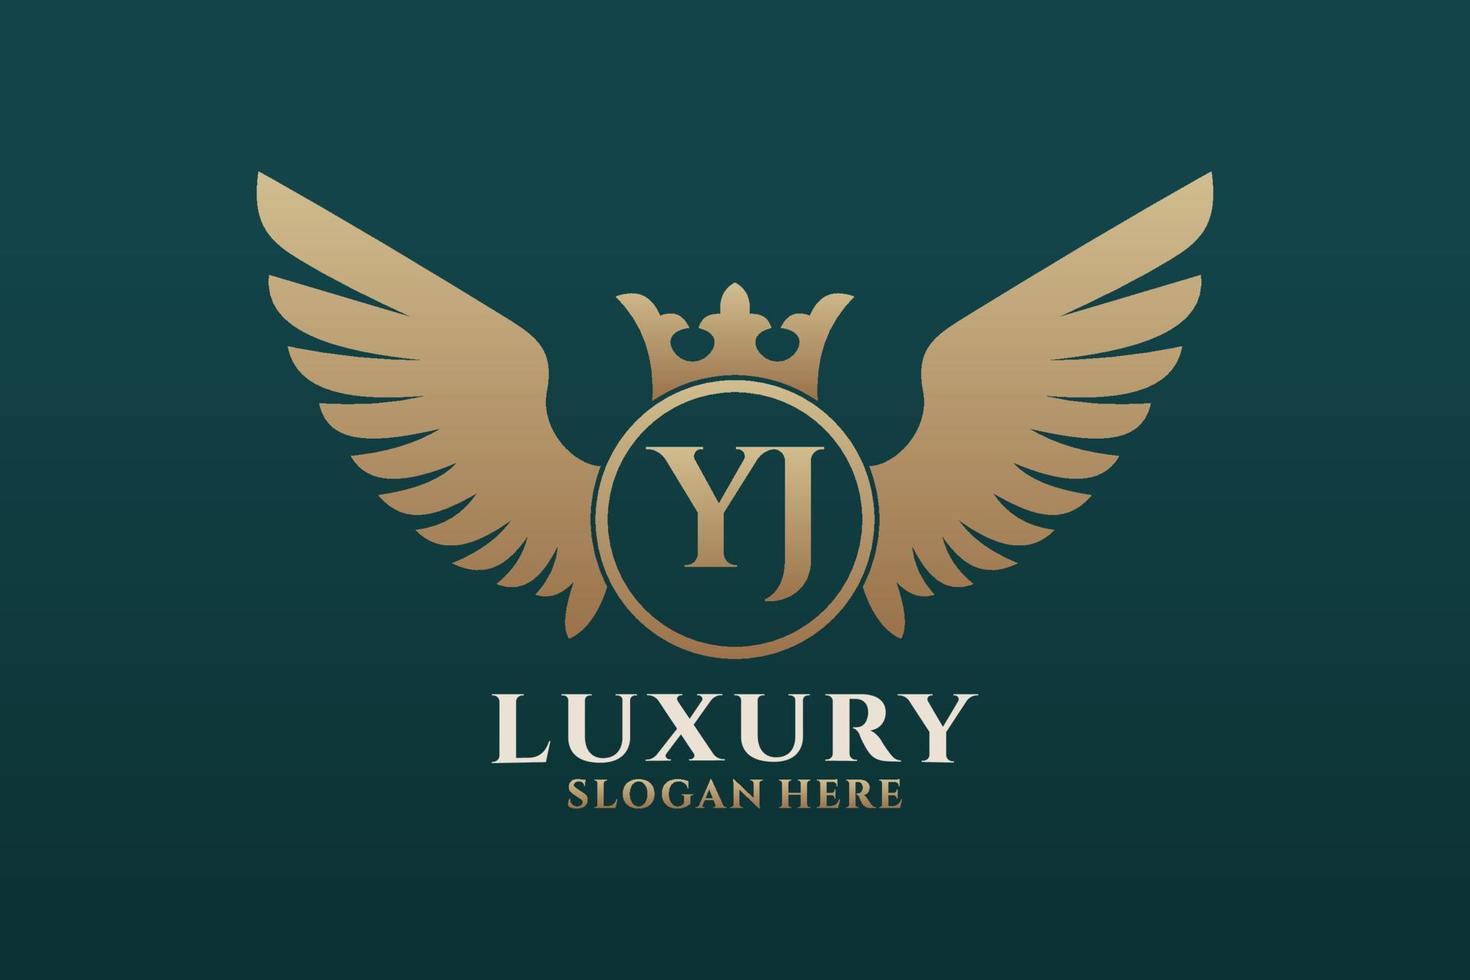 luxe Koninklijk vleugel brief yj kam goud kleur logo vector, zege logo, kam logo, vleugel logo, vector logo sjabloon.